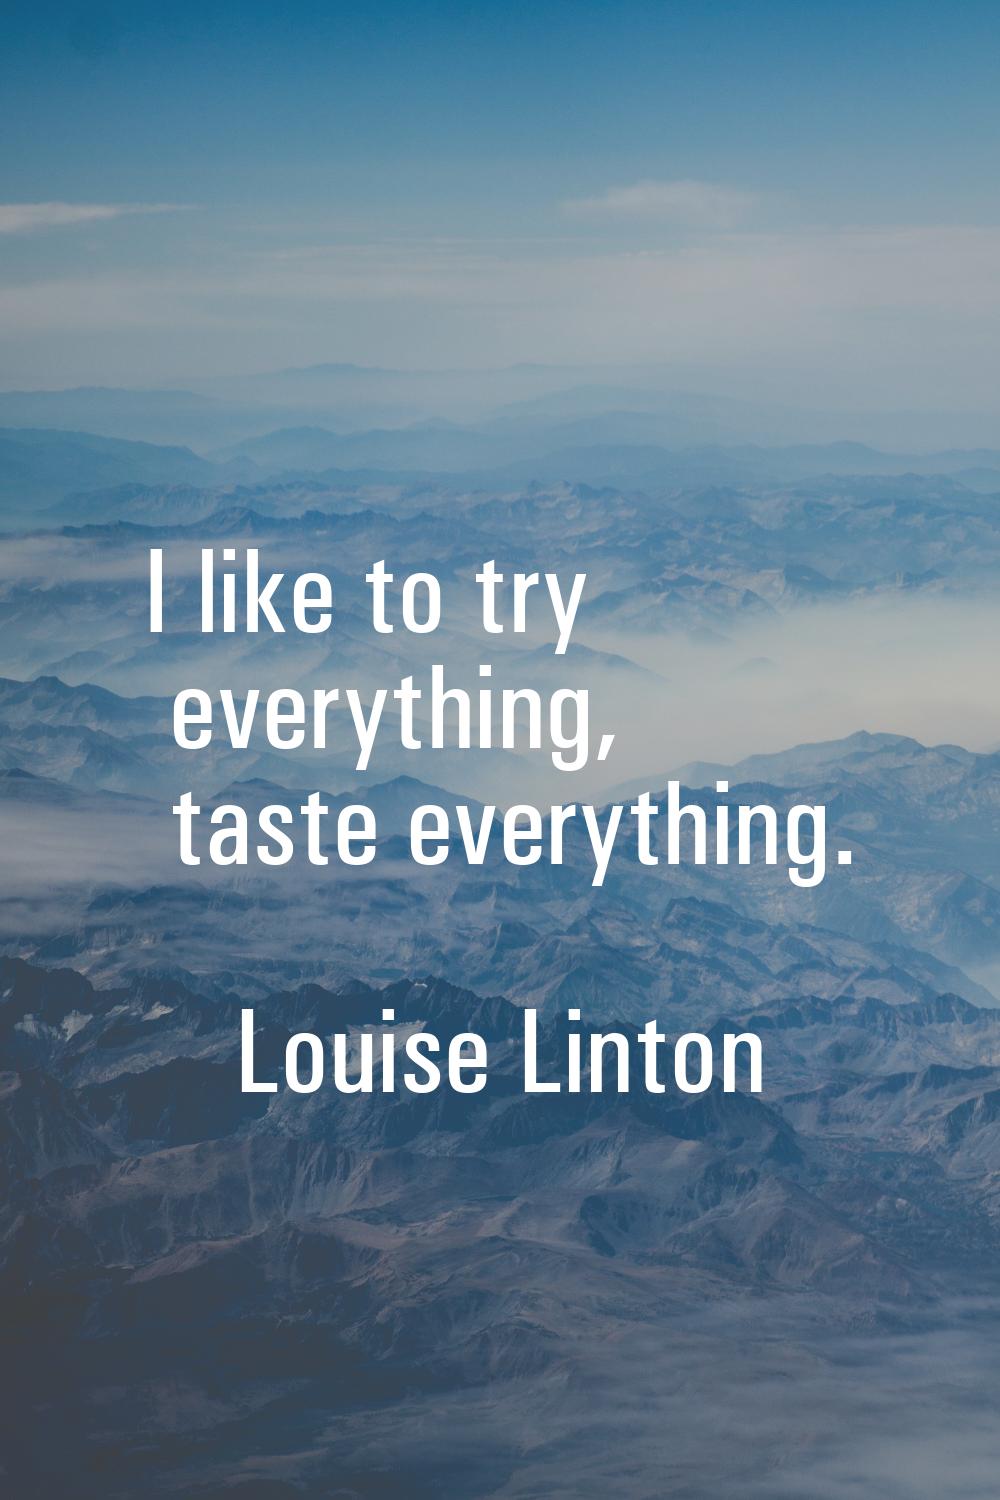 I like to try everything, taste everything.